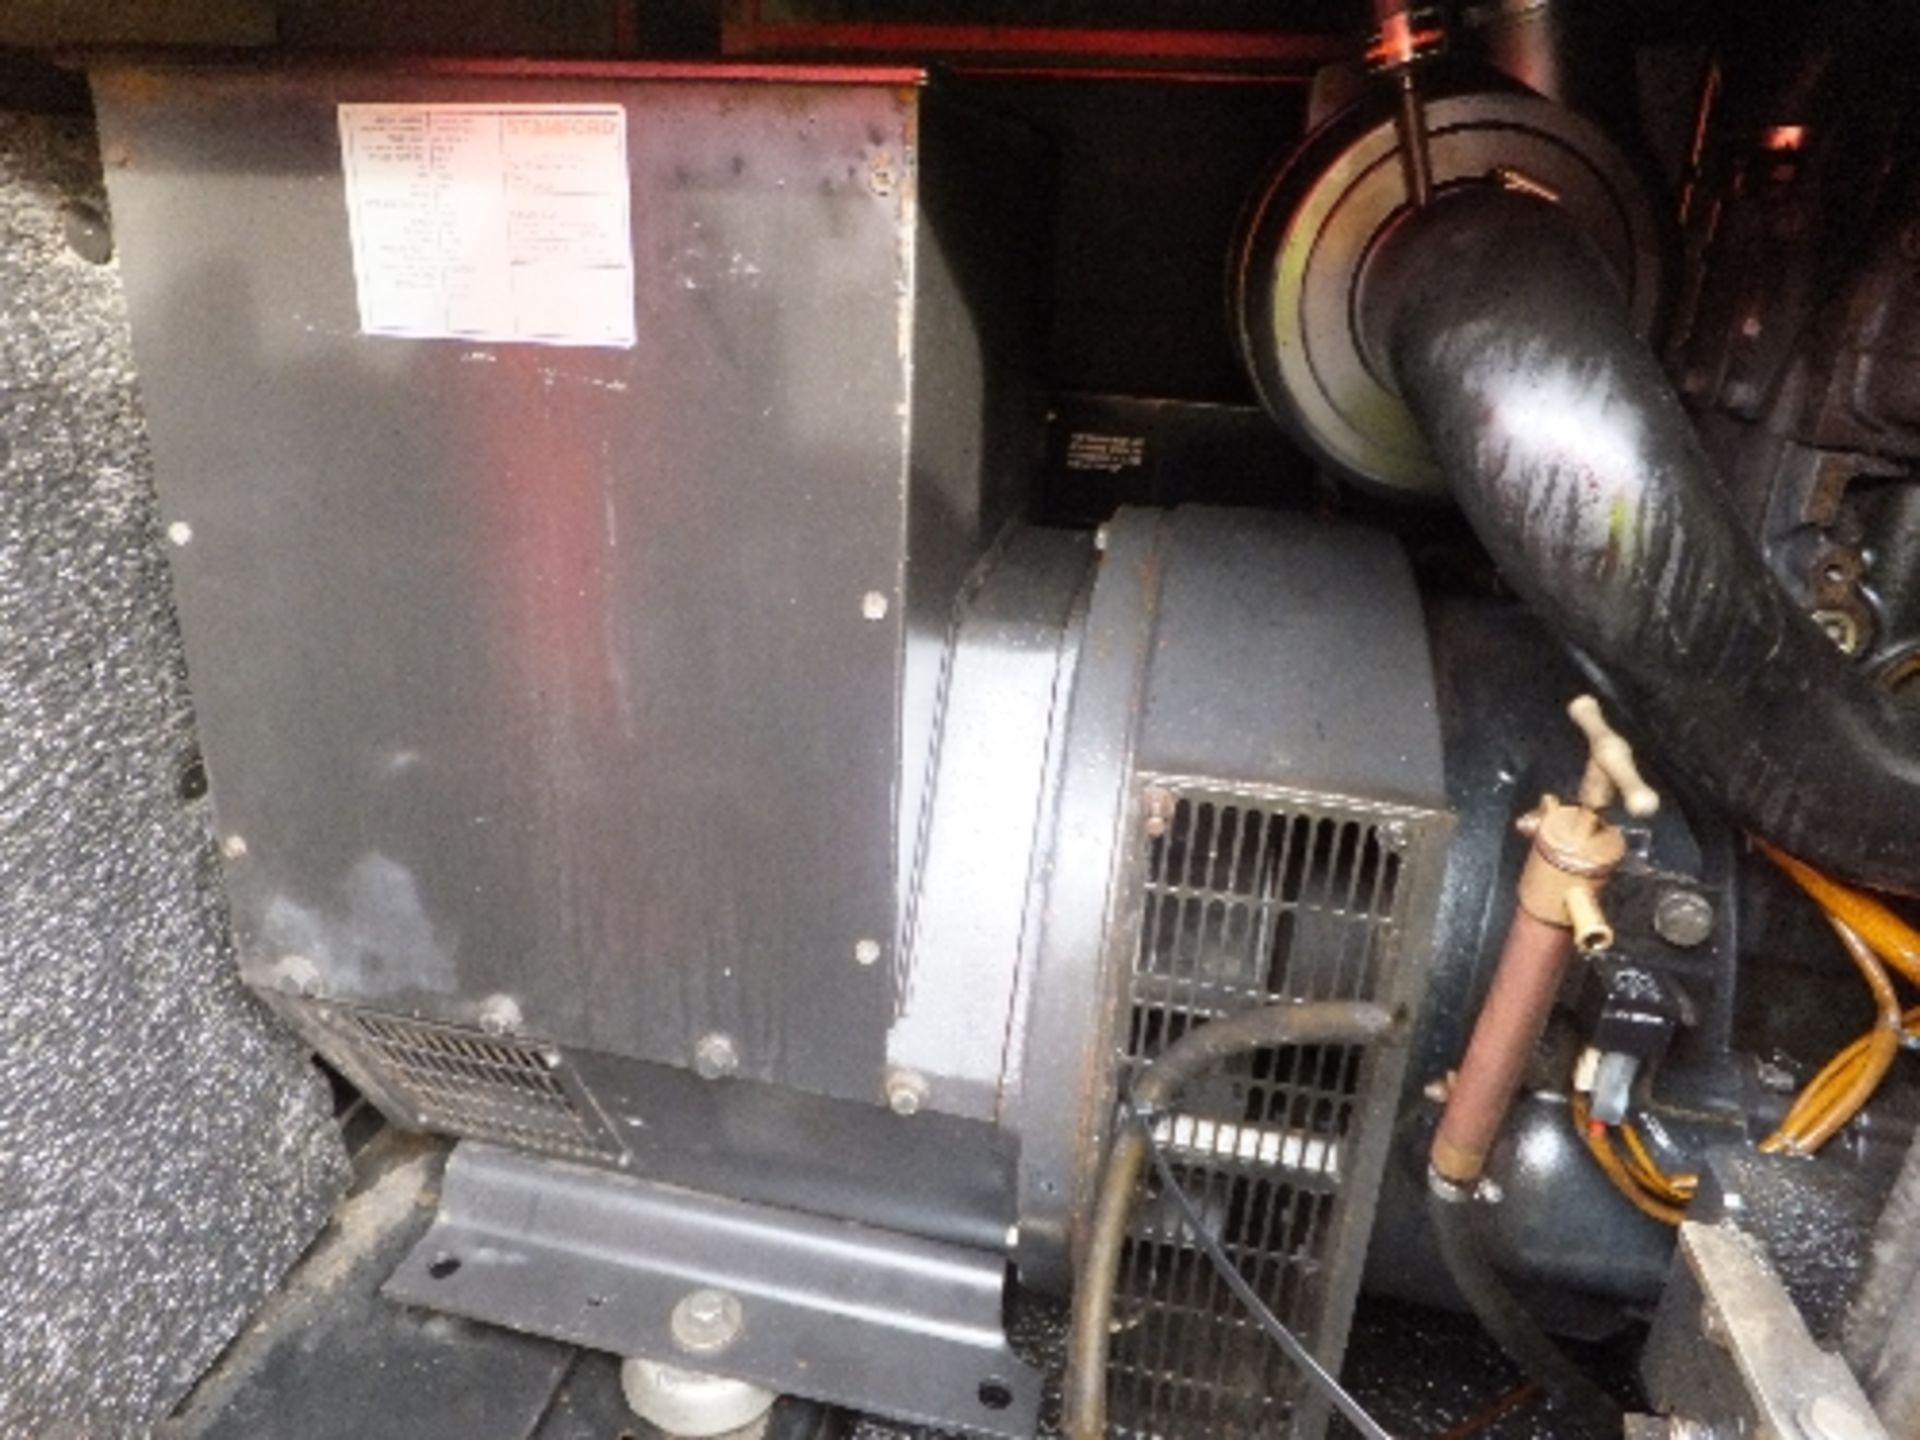 Genset MG115 SS-P generator 1215 hrs, RMP - Image 3 of 6